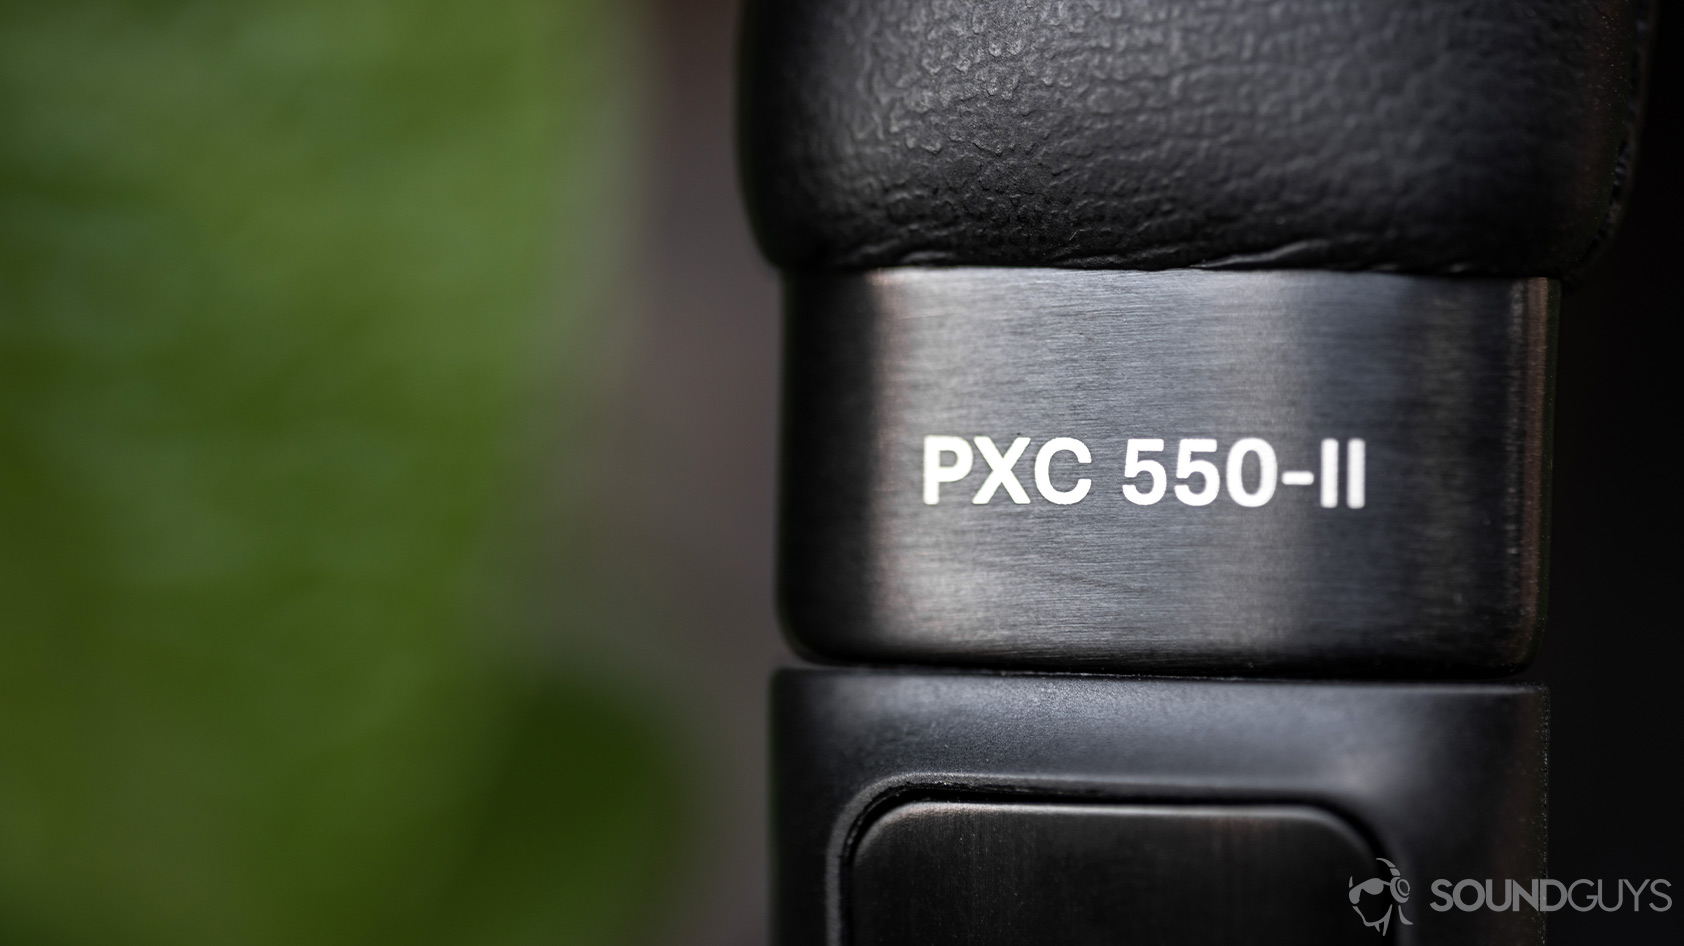 The Sennheiser PXC 550-II noise canceling headphones logo on the brushed aluminum accent of the headband.